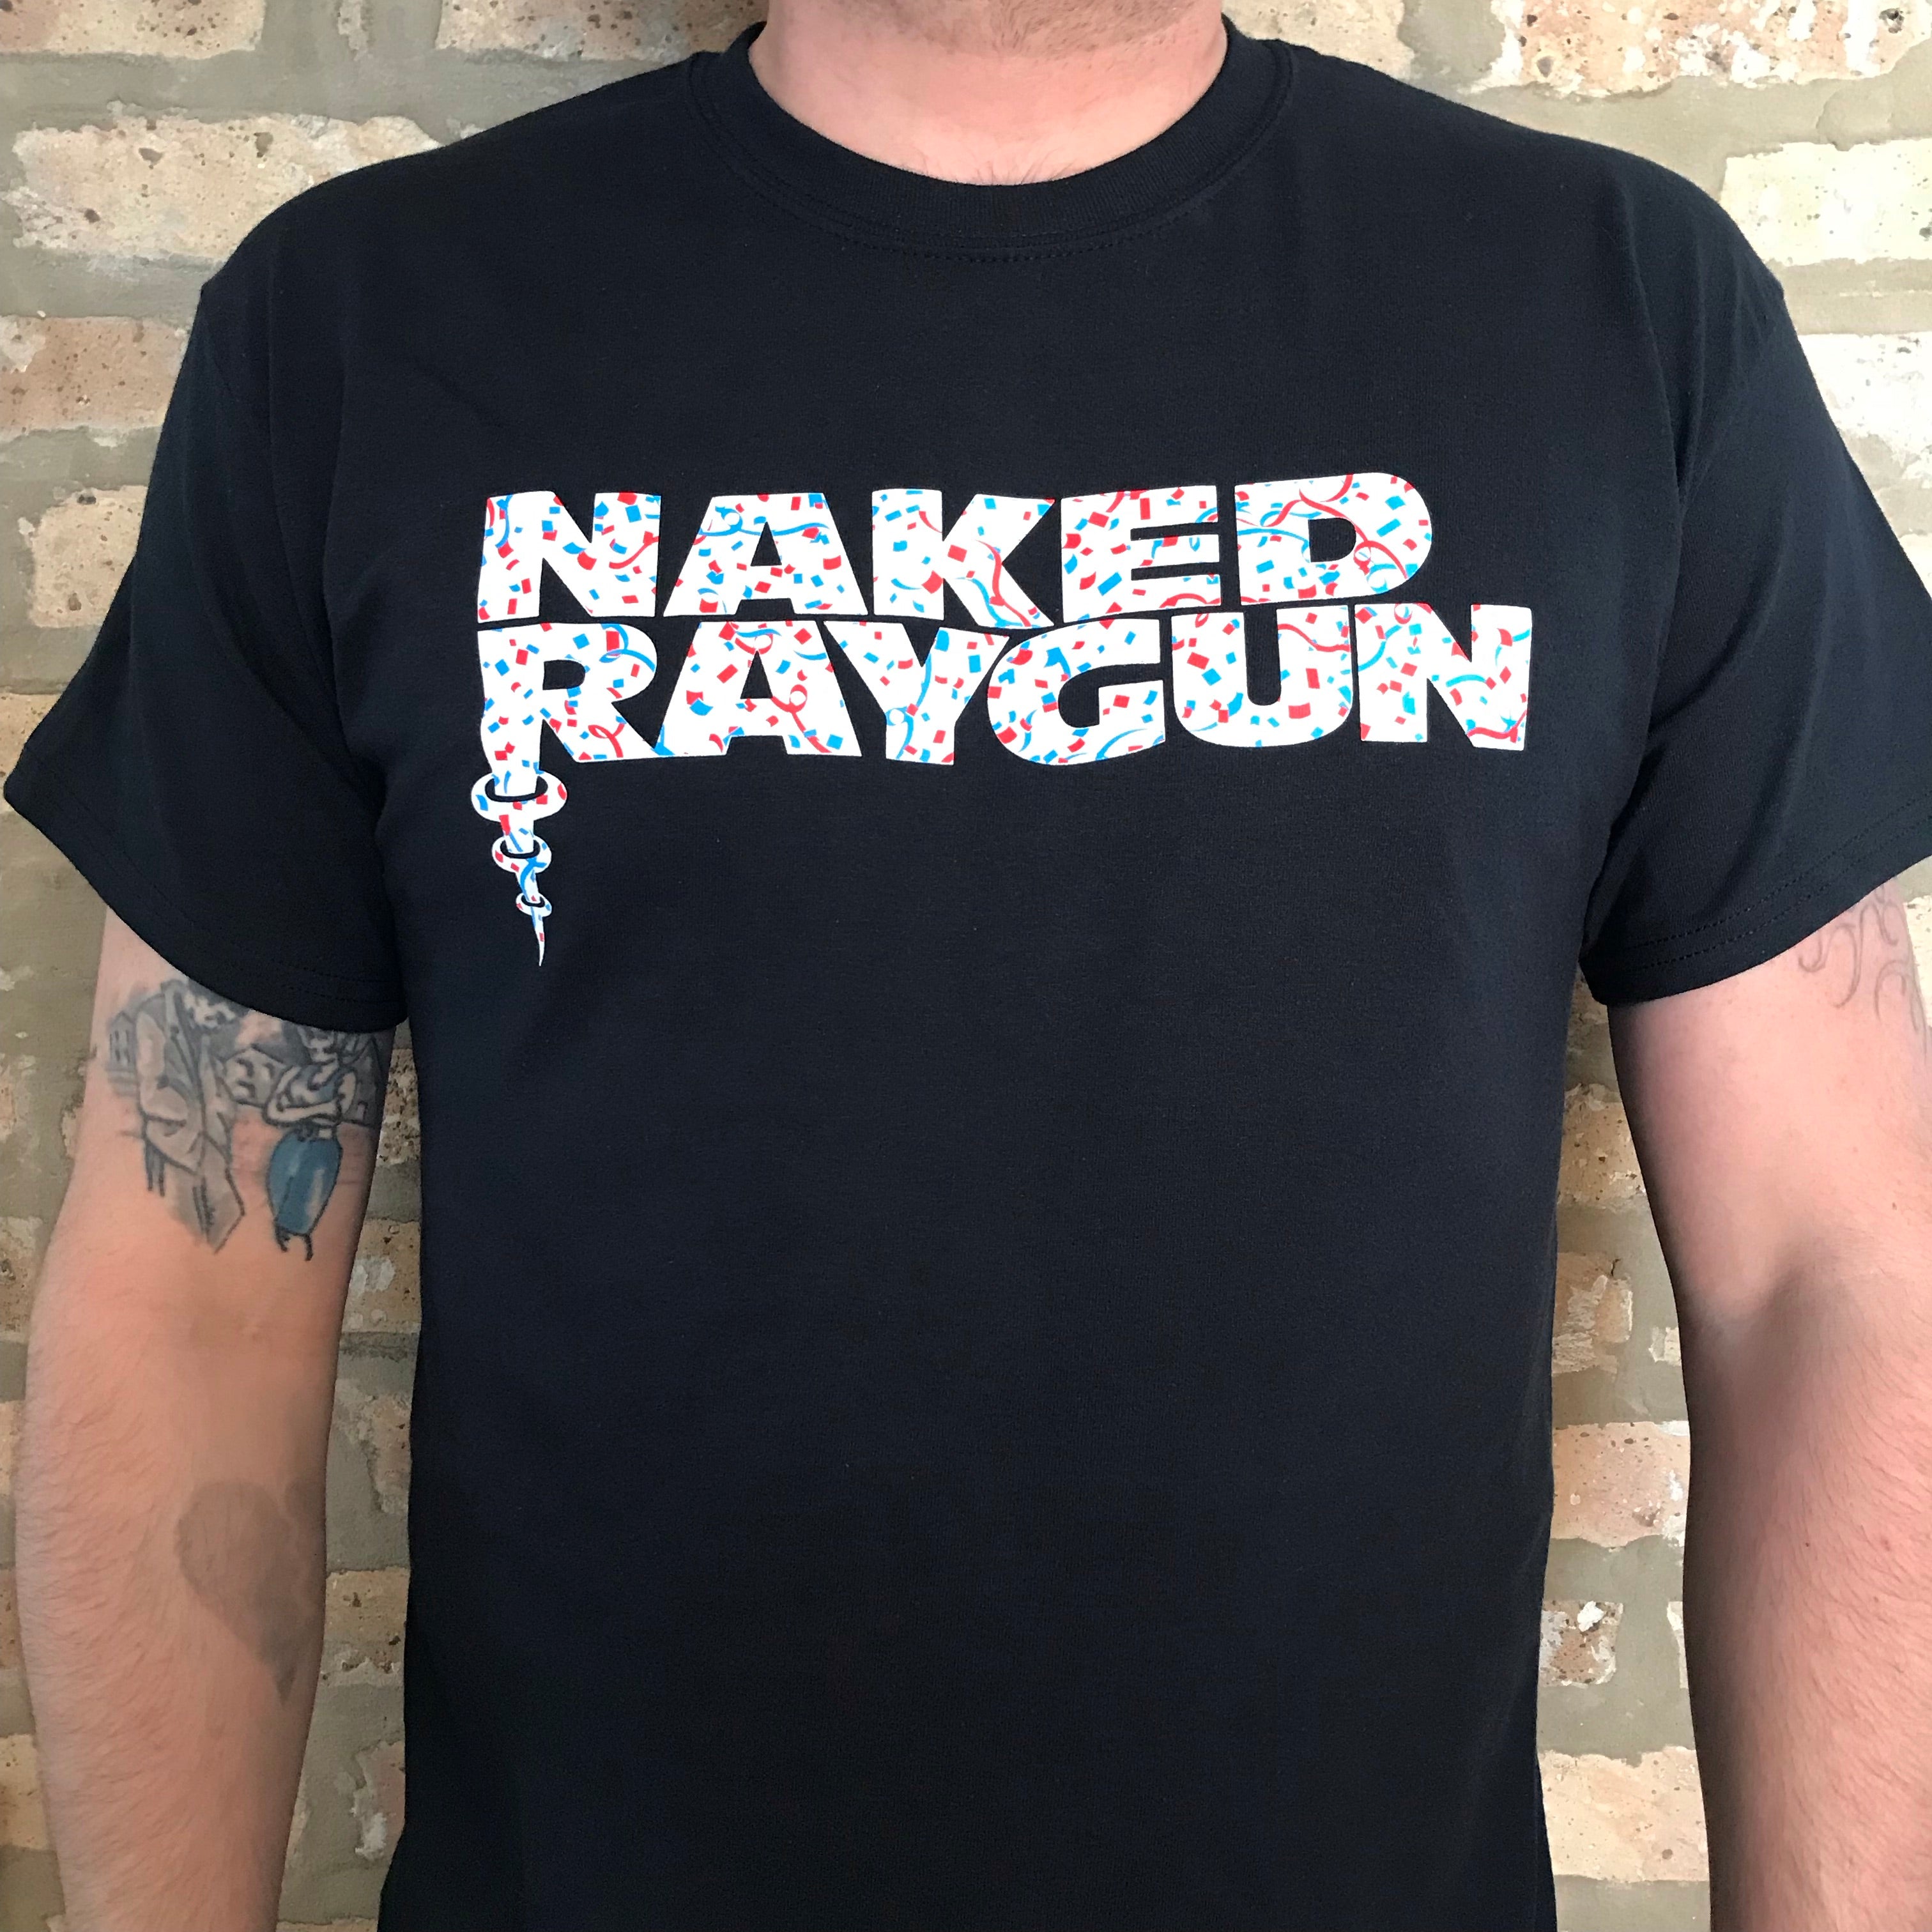 ray gun t shirts